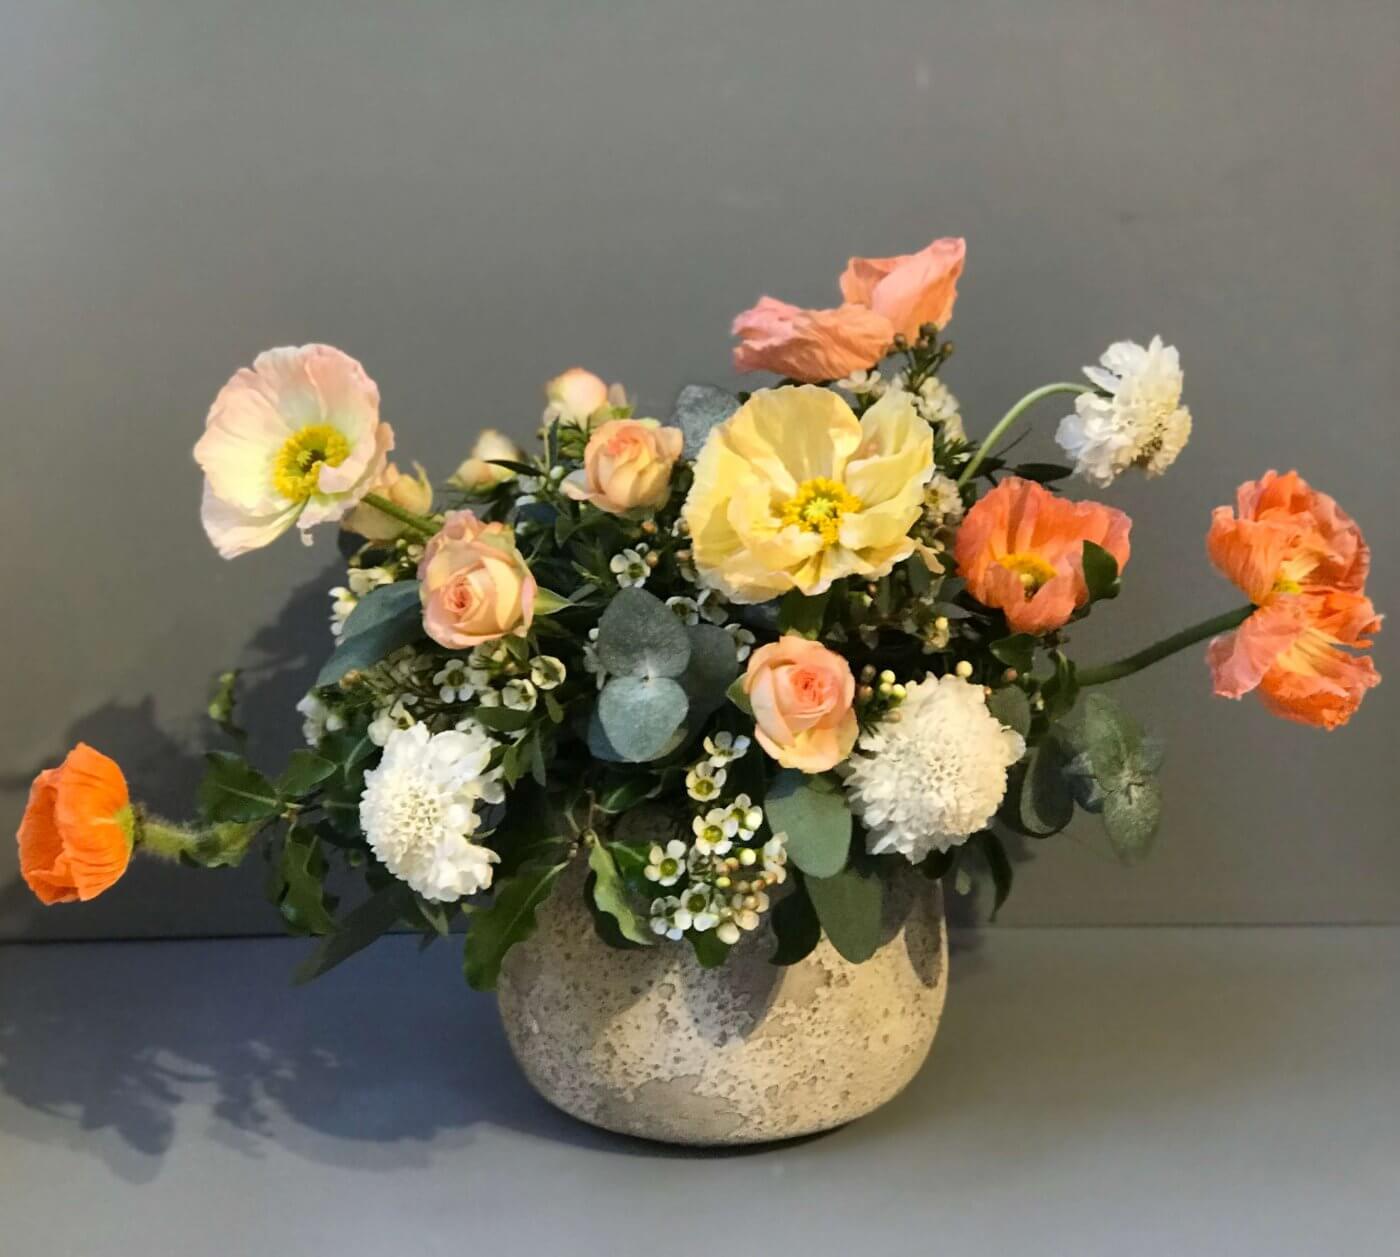 Flowers in Flower Pot | The Mustcard